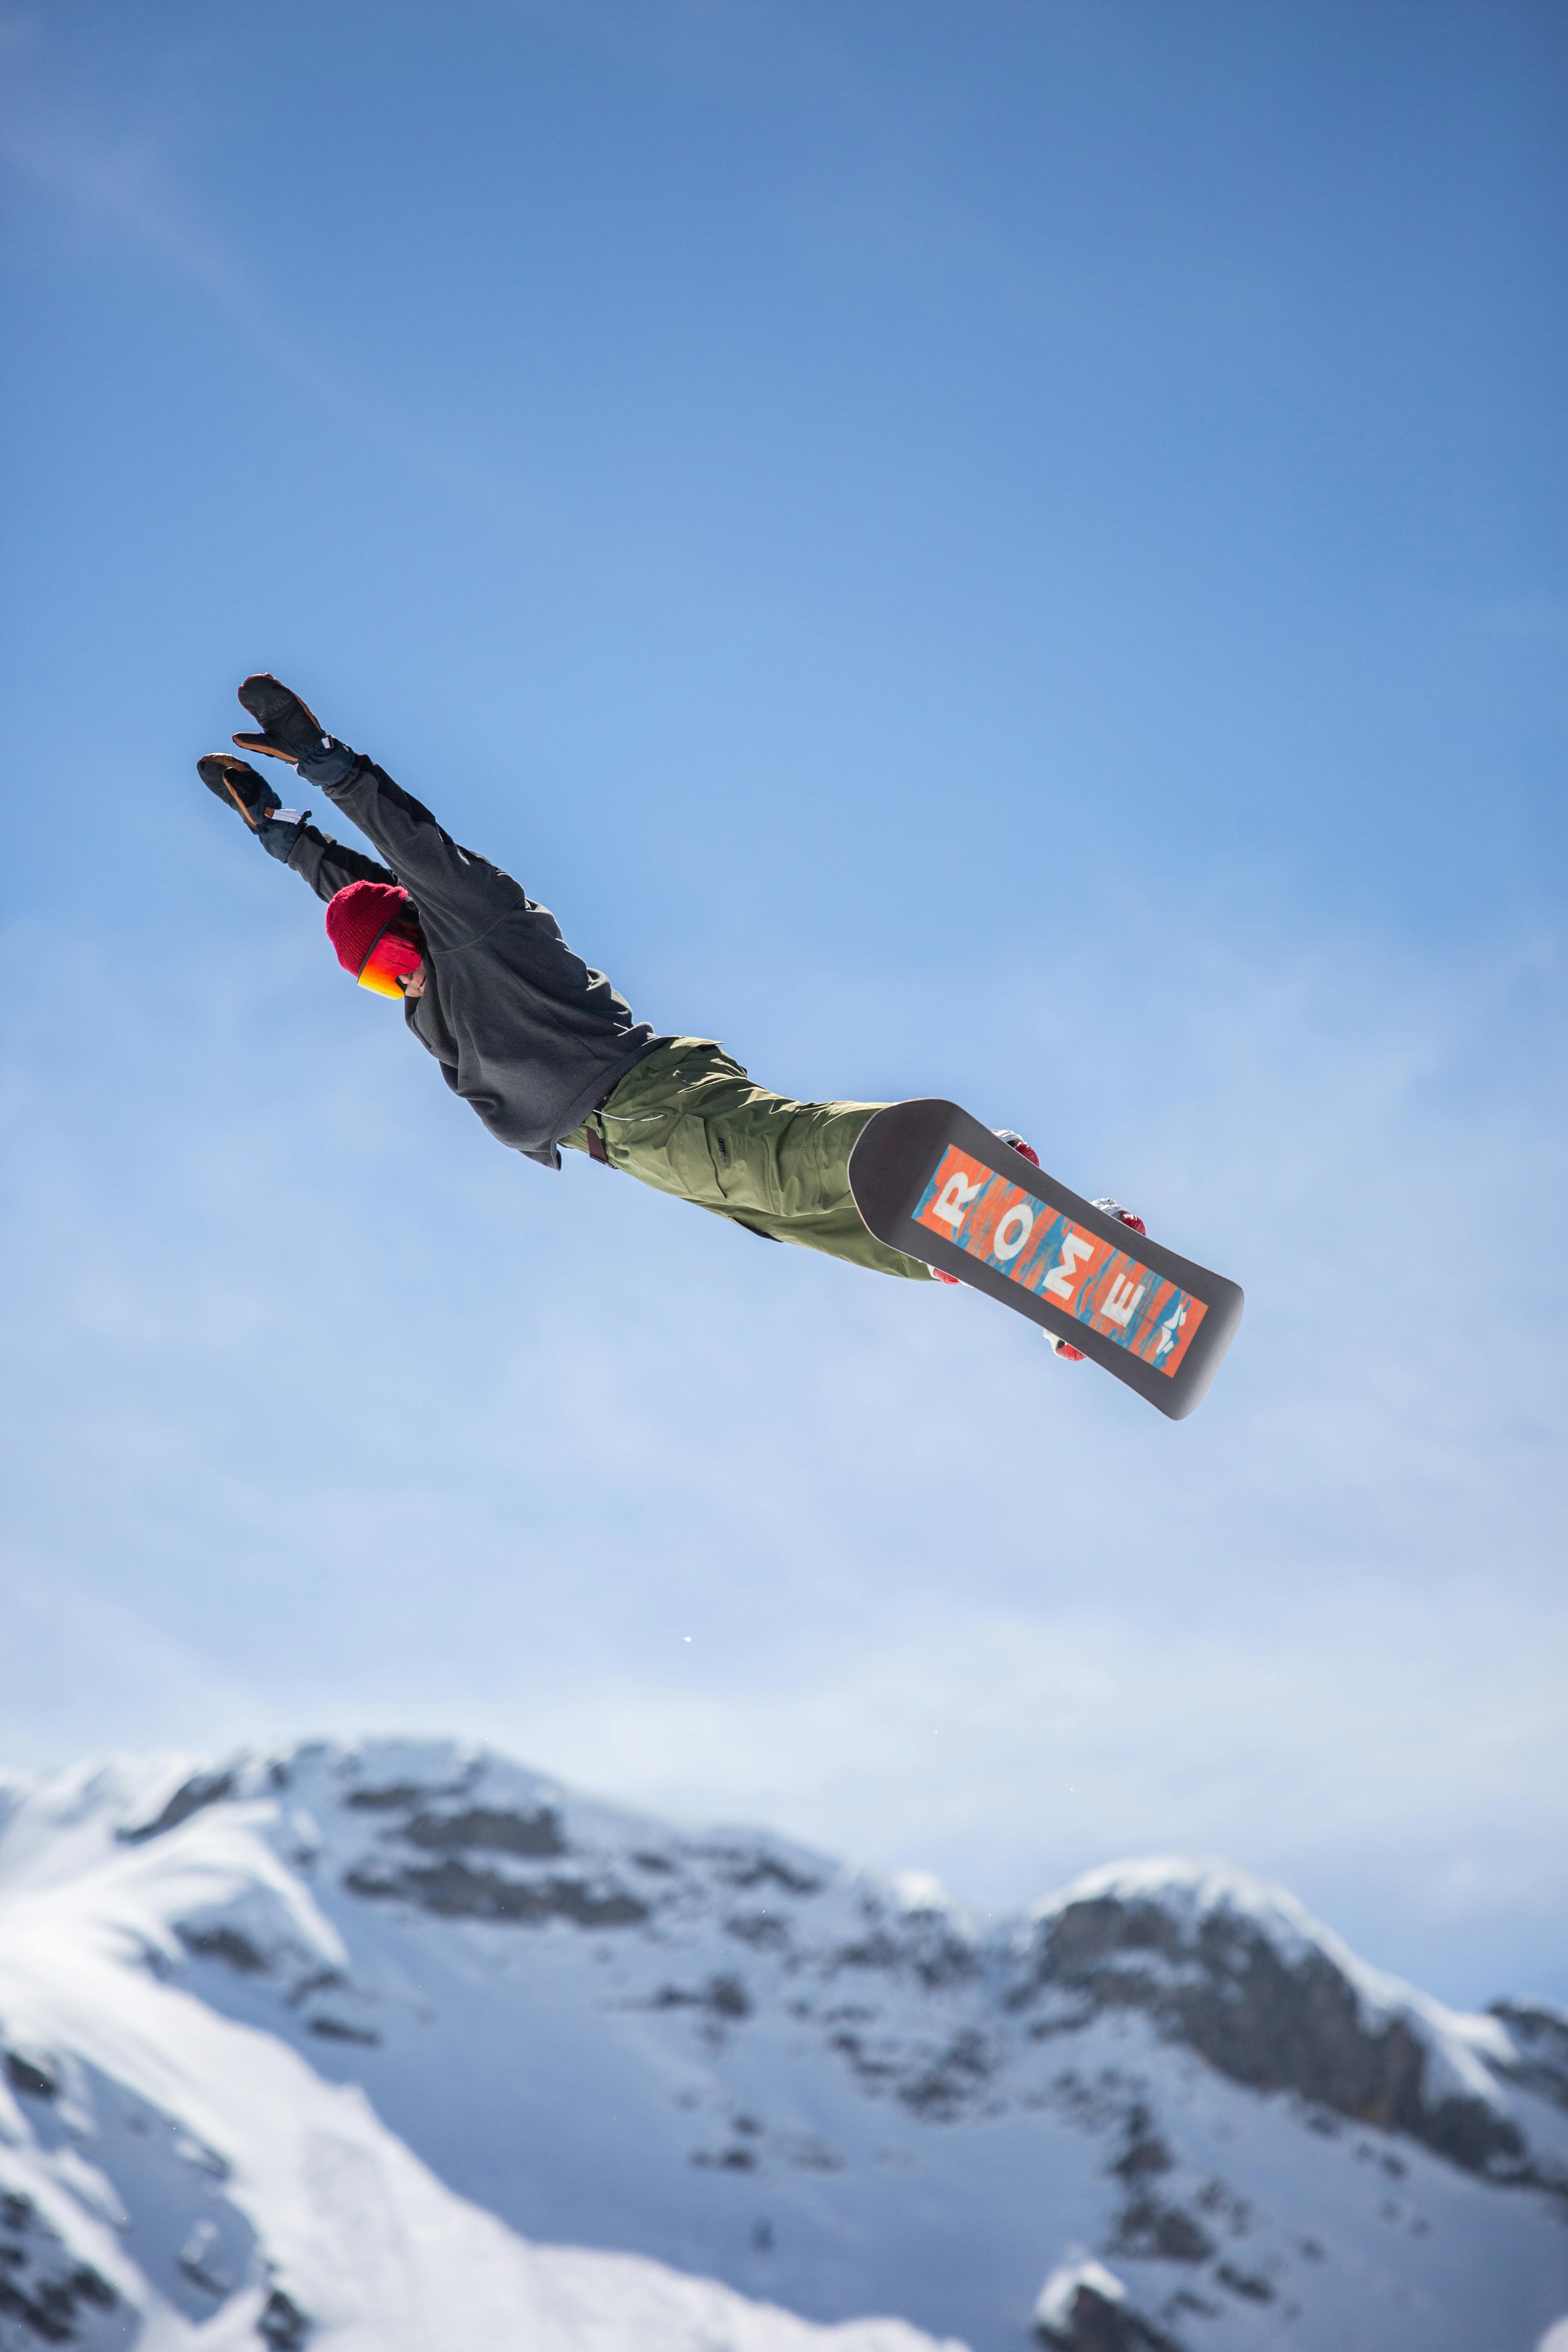 Snowboarding iPhone Wallpaper  ID 43665